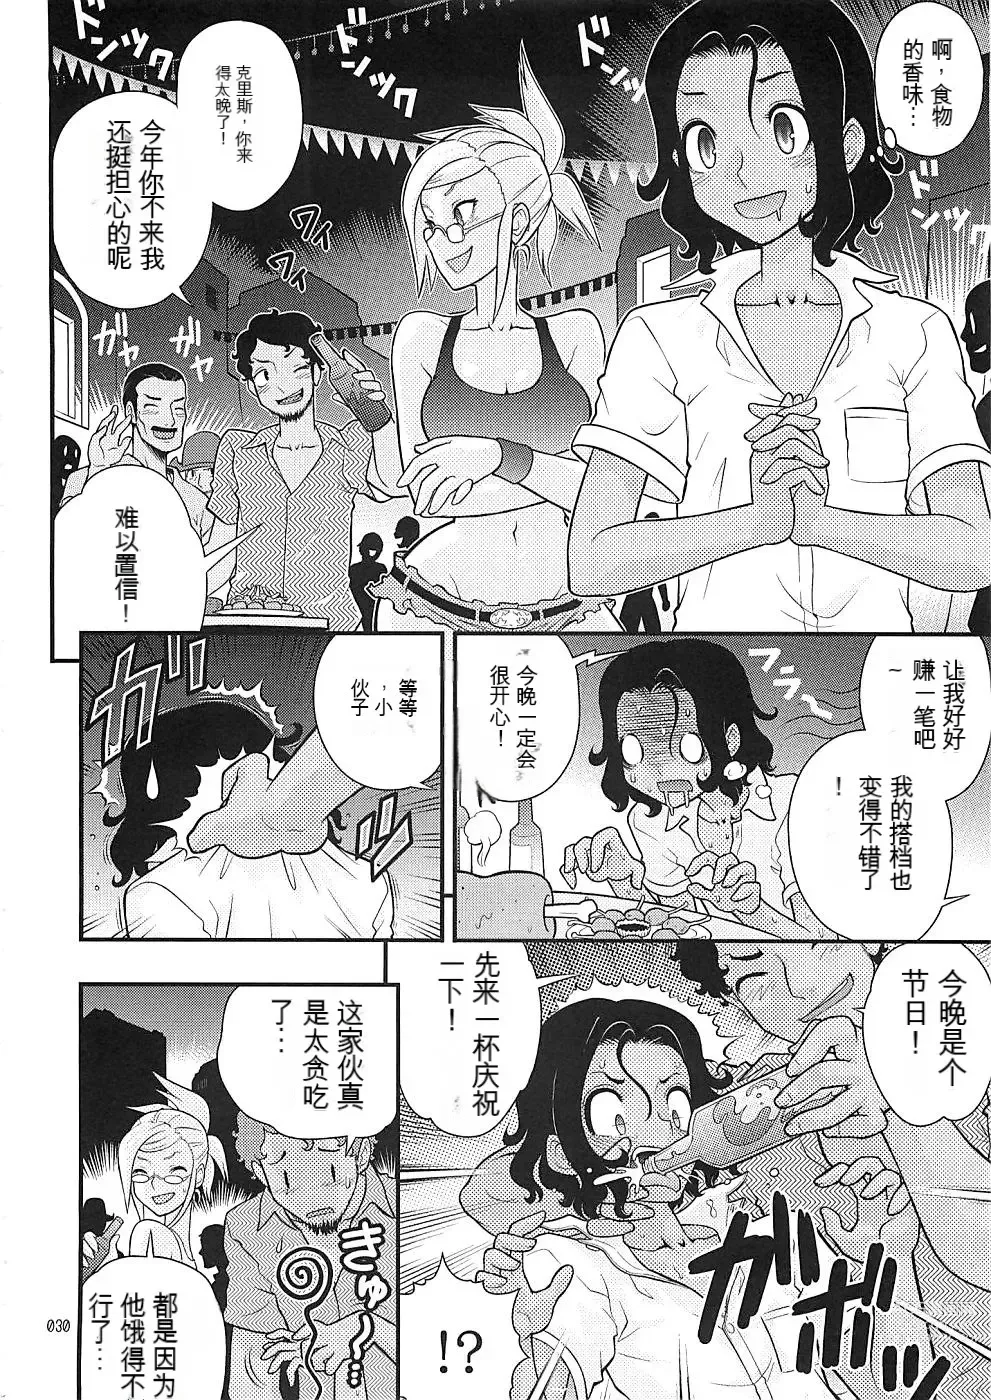 Page 2 of doujinshi Endless Summer Vacation